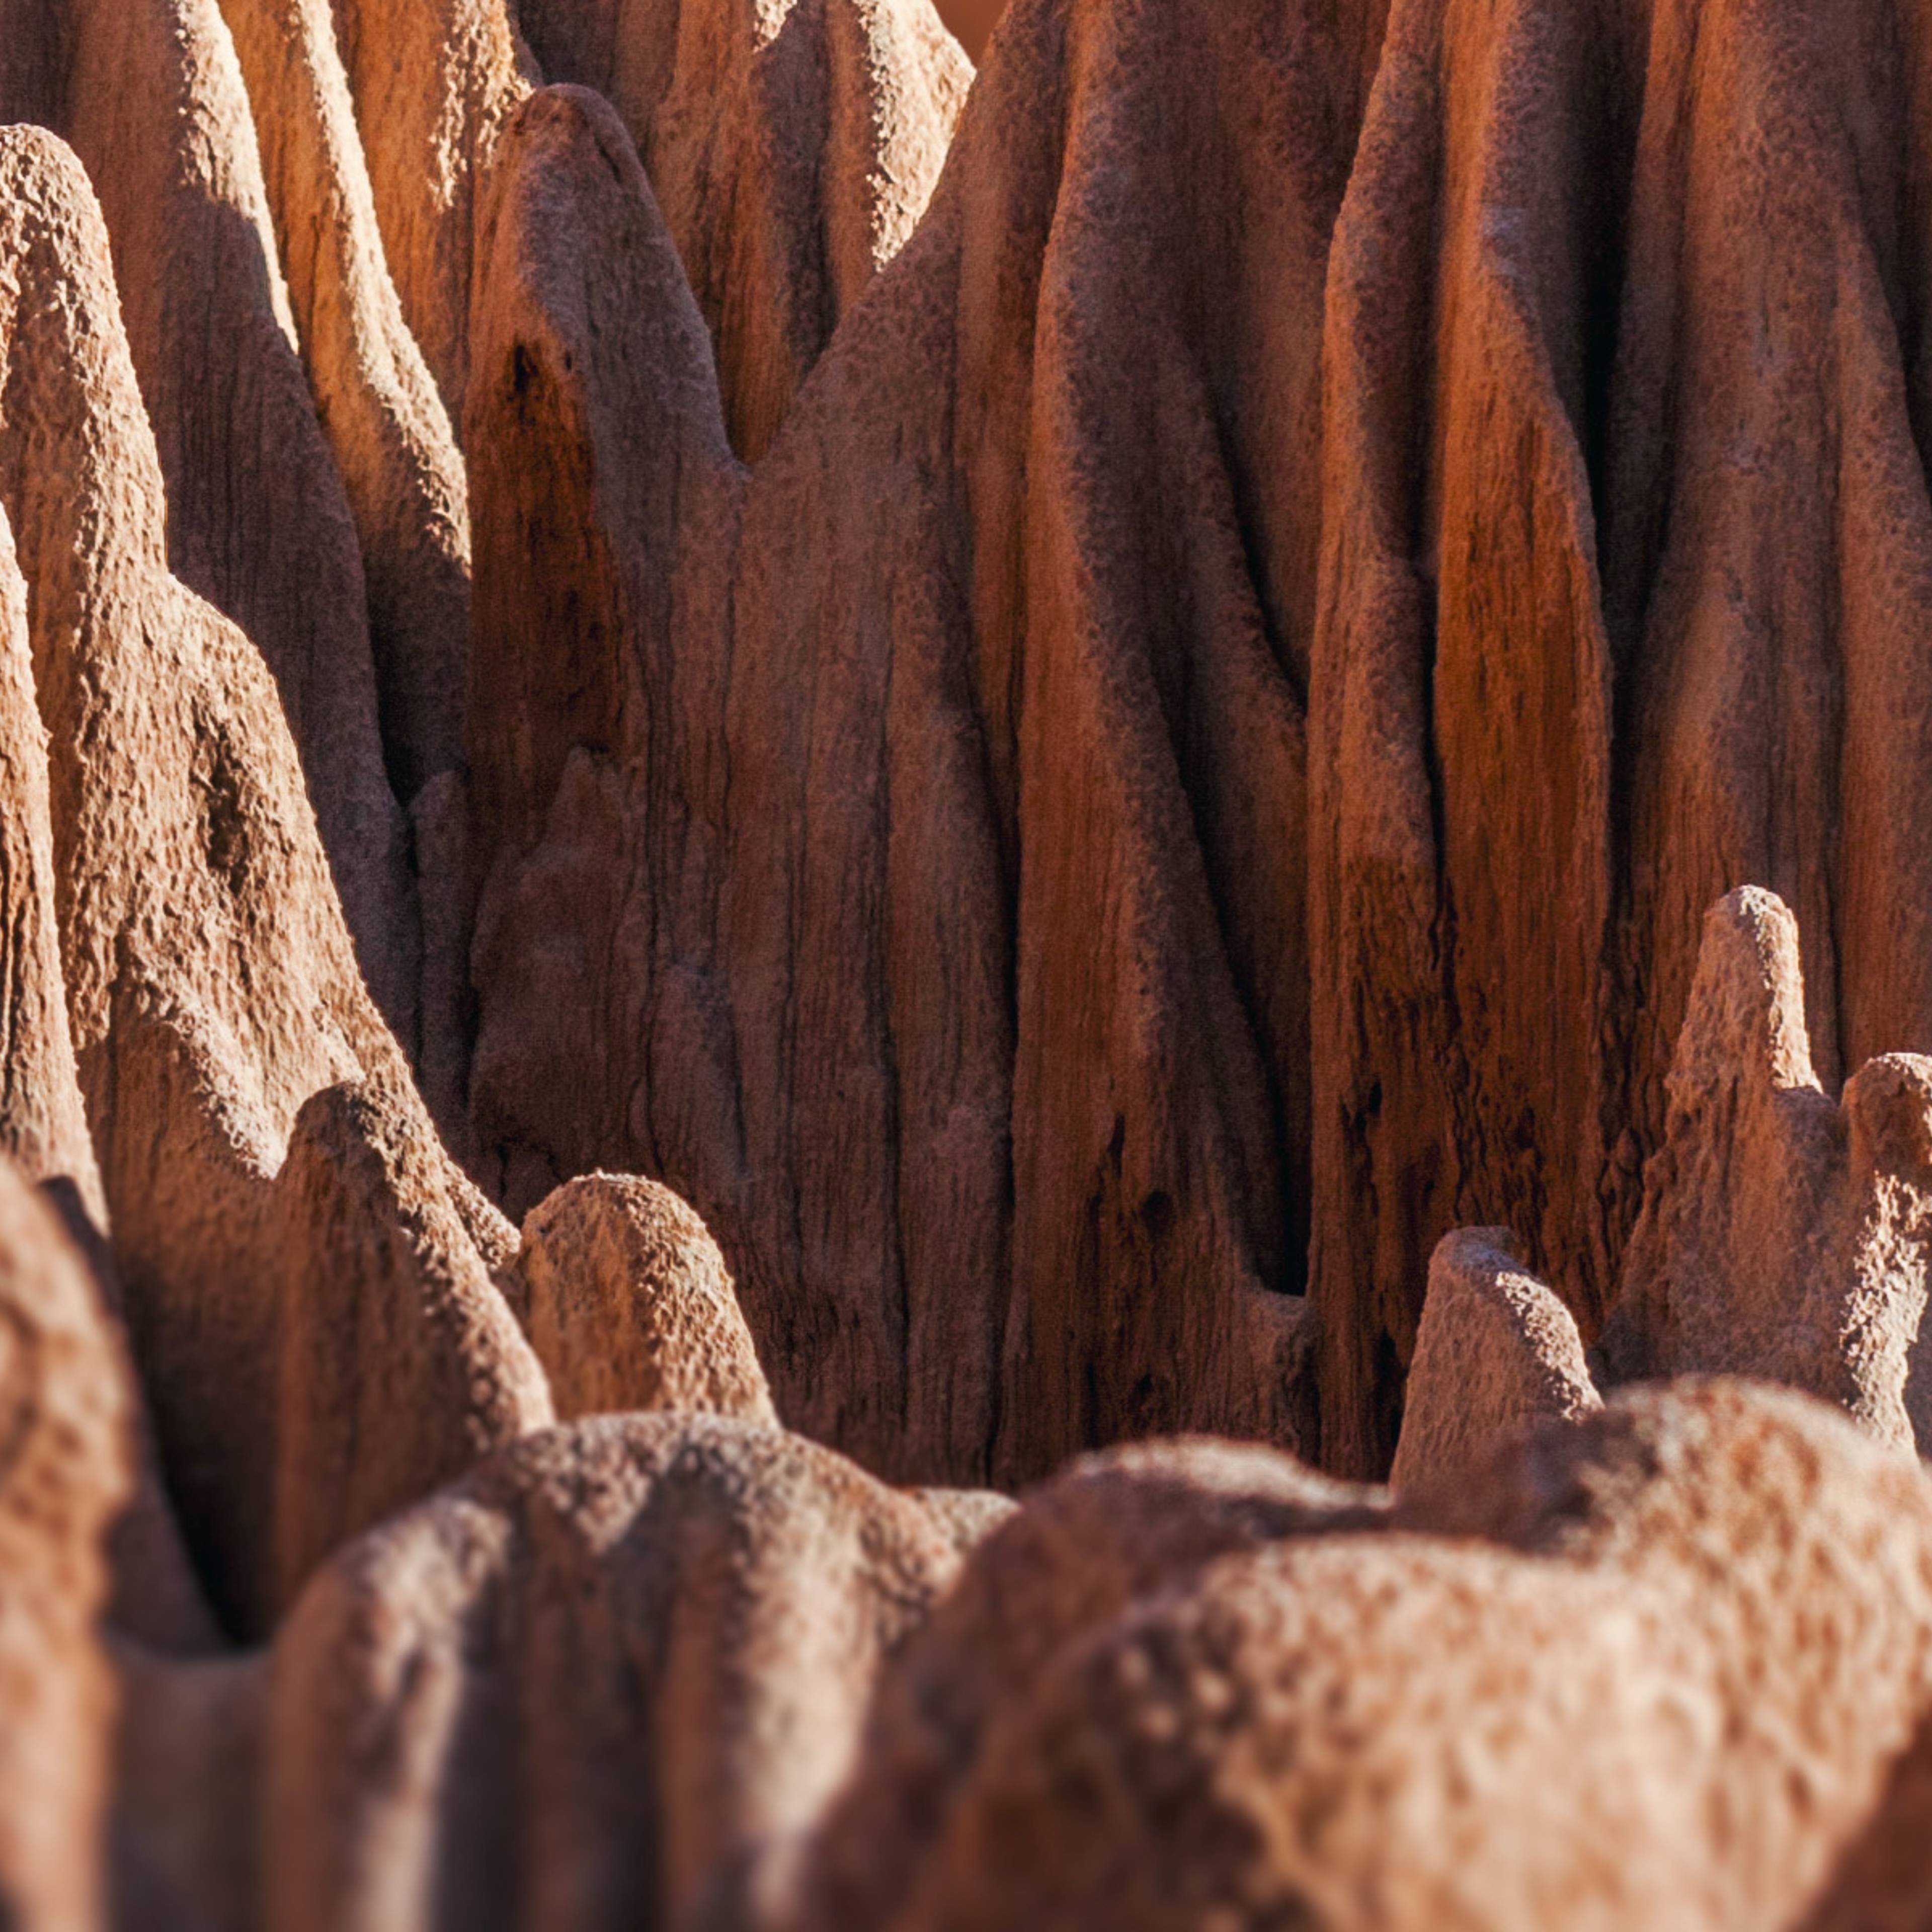 The Red tsingy of Antsiranana, Madagascar. Natural karsts ma